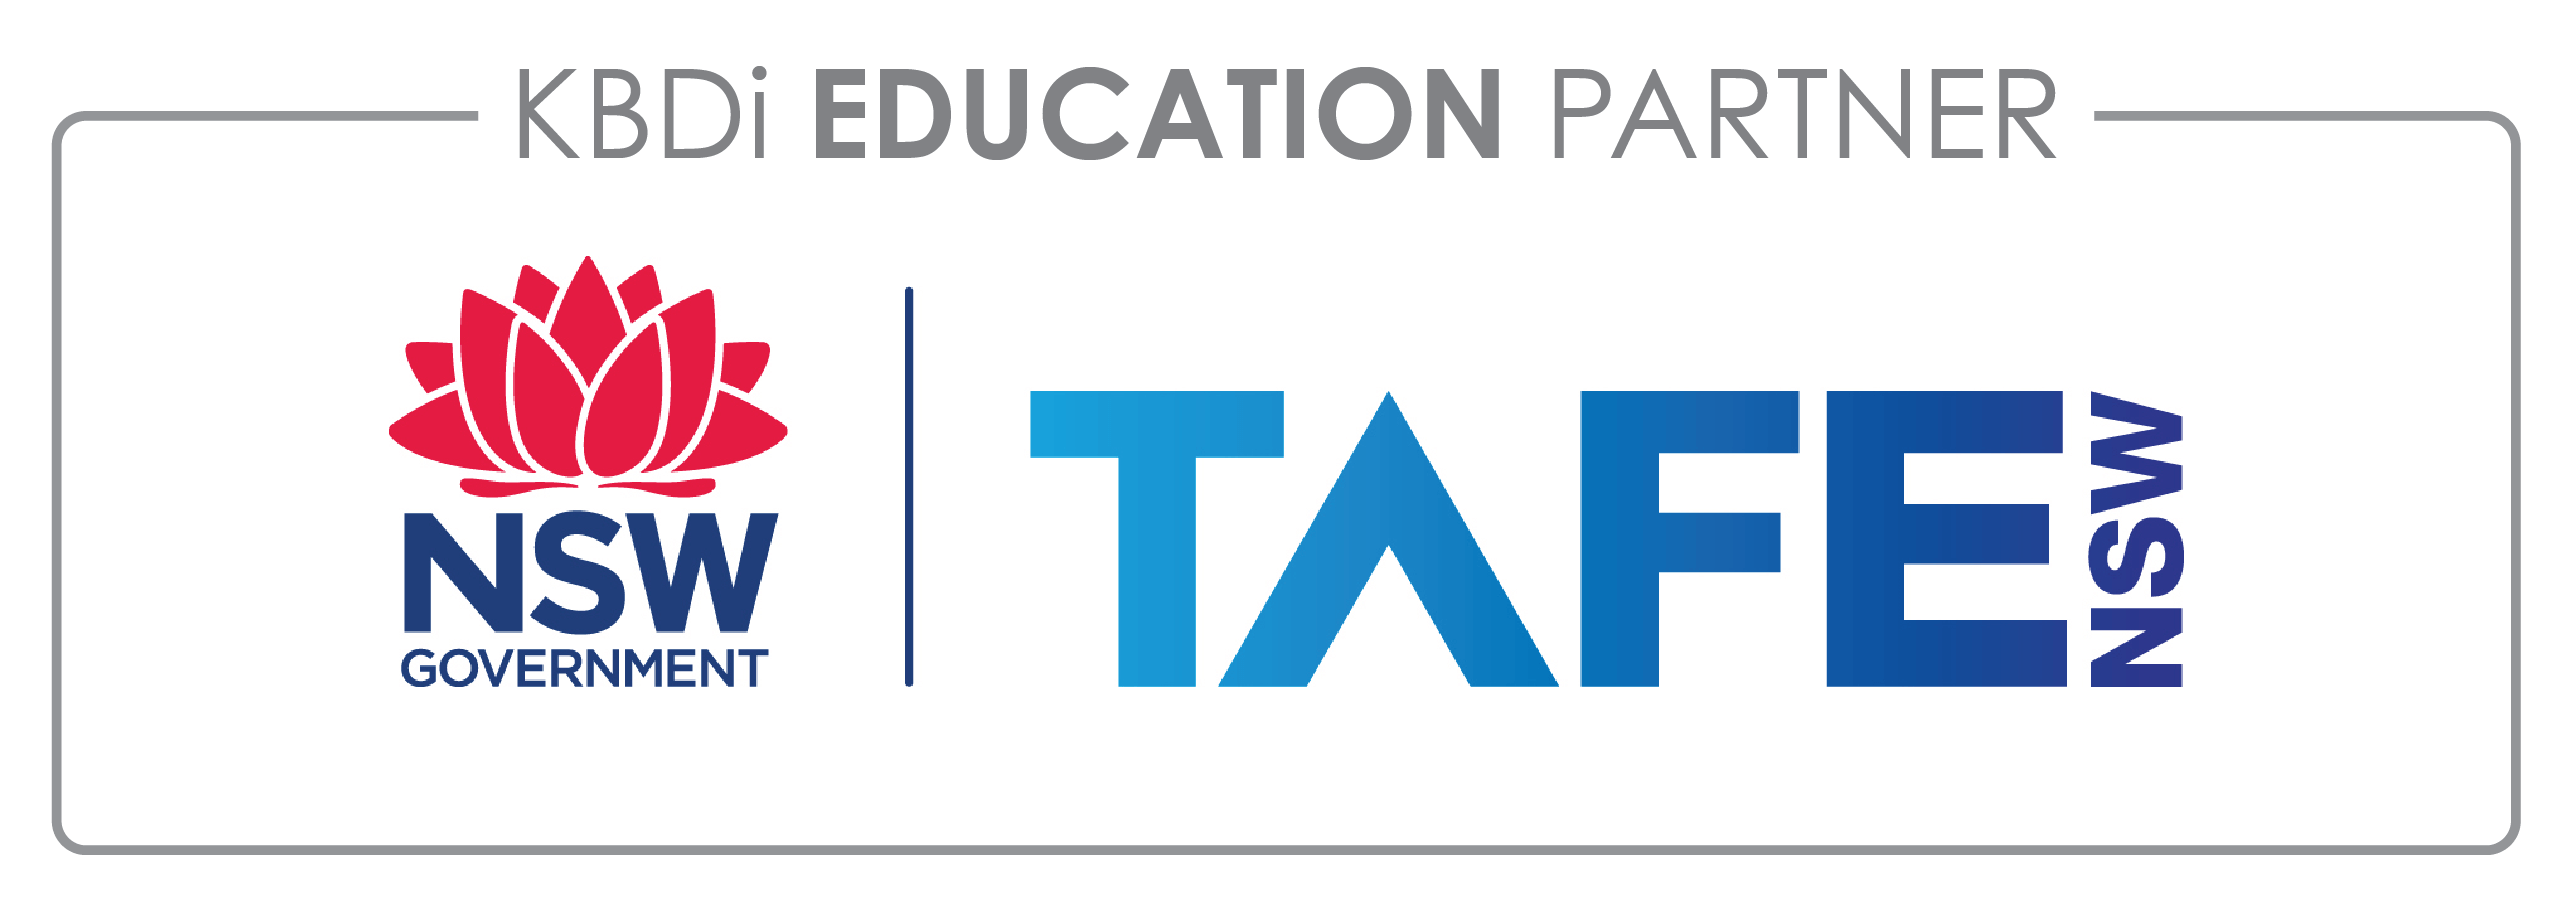 KBDi Education Partner TAFE NSW